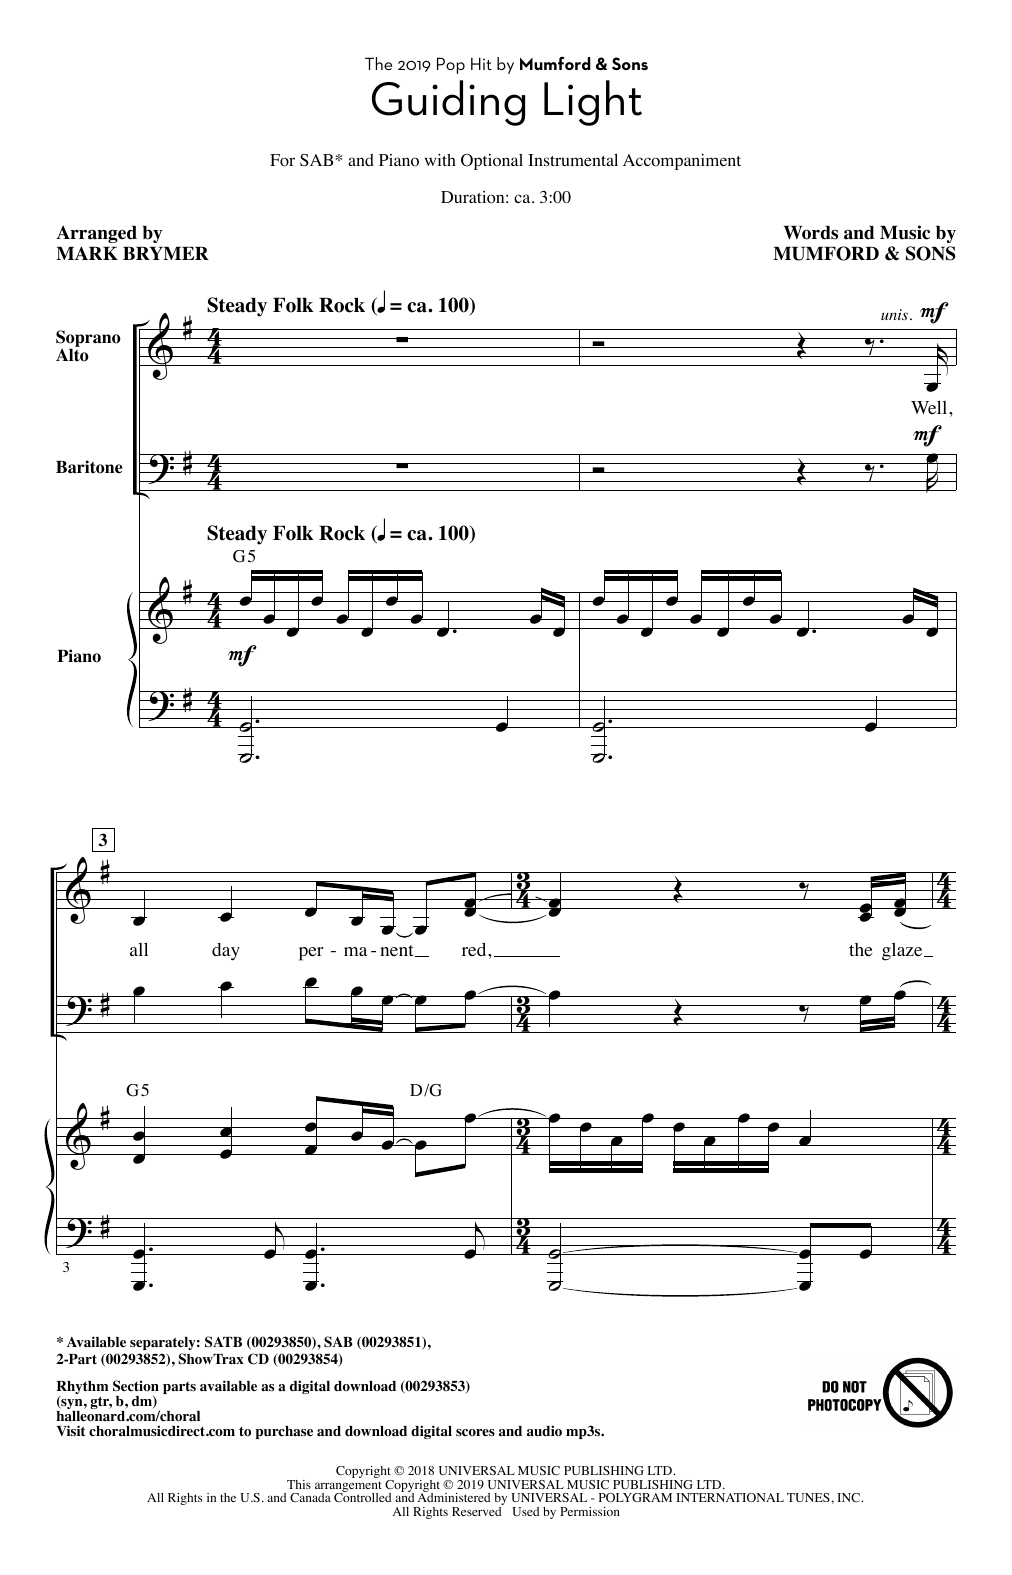 Mumford & Sons Guiding Light (arr. Mark Brymer) Sheet Music Notes & Chords for SATB Choir - Download or Print PDF